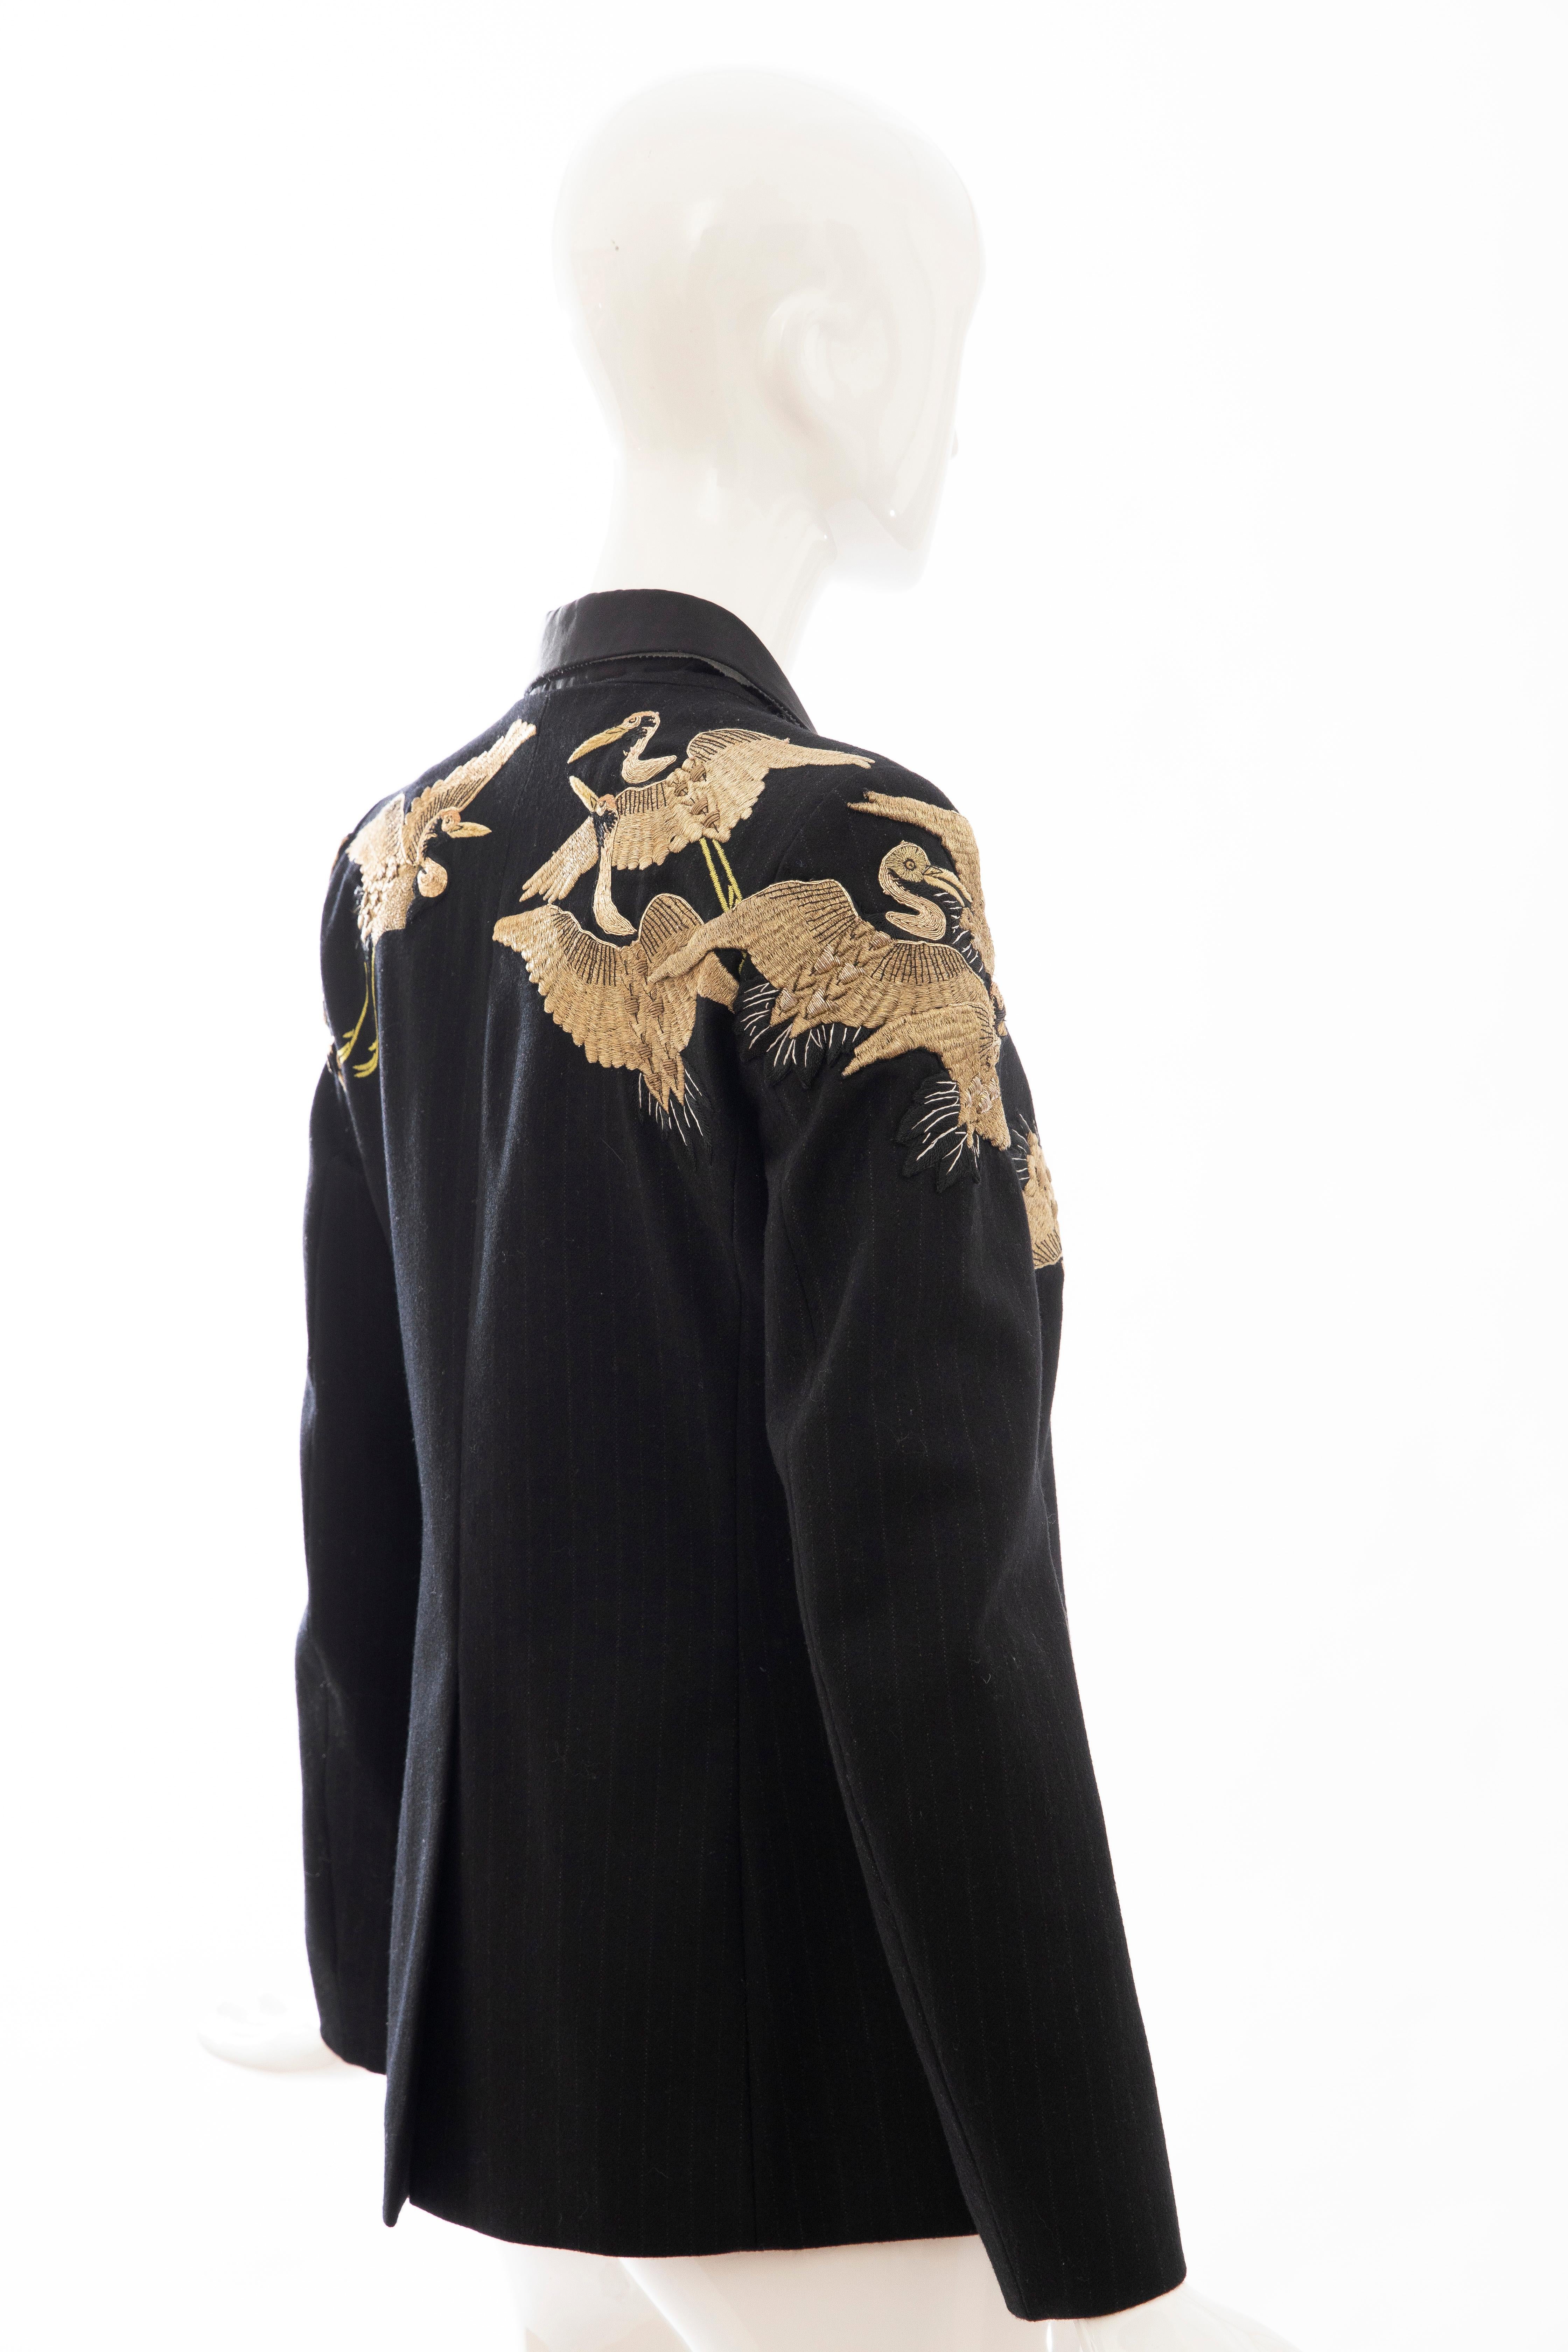 Women's Dries van Noten Runway Black Wool Pinstripe Embroidered Jacket, Fall 2012